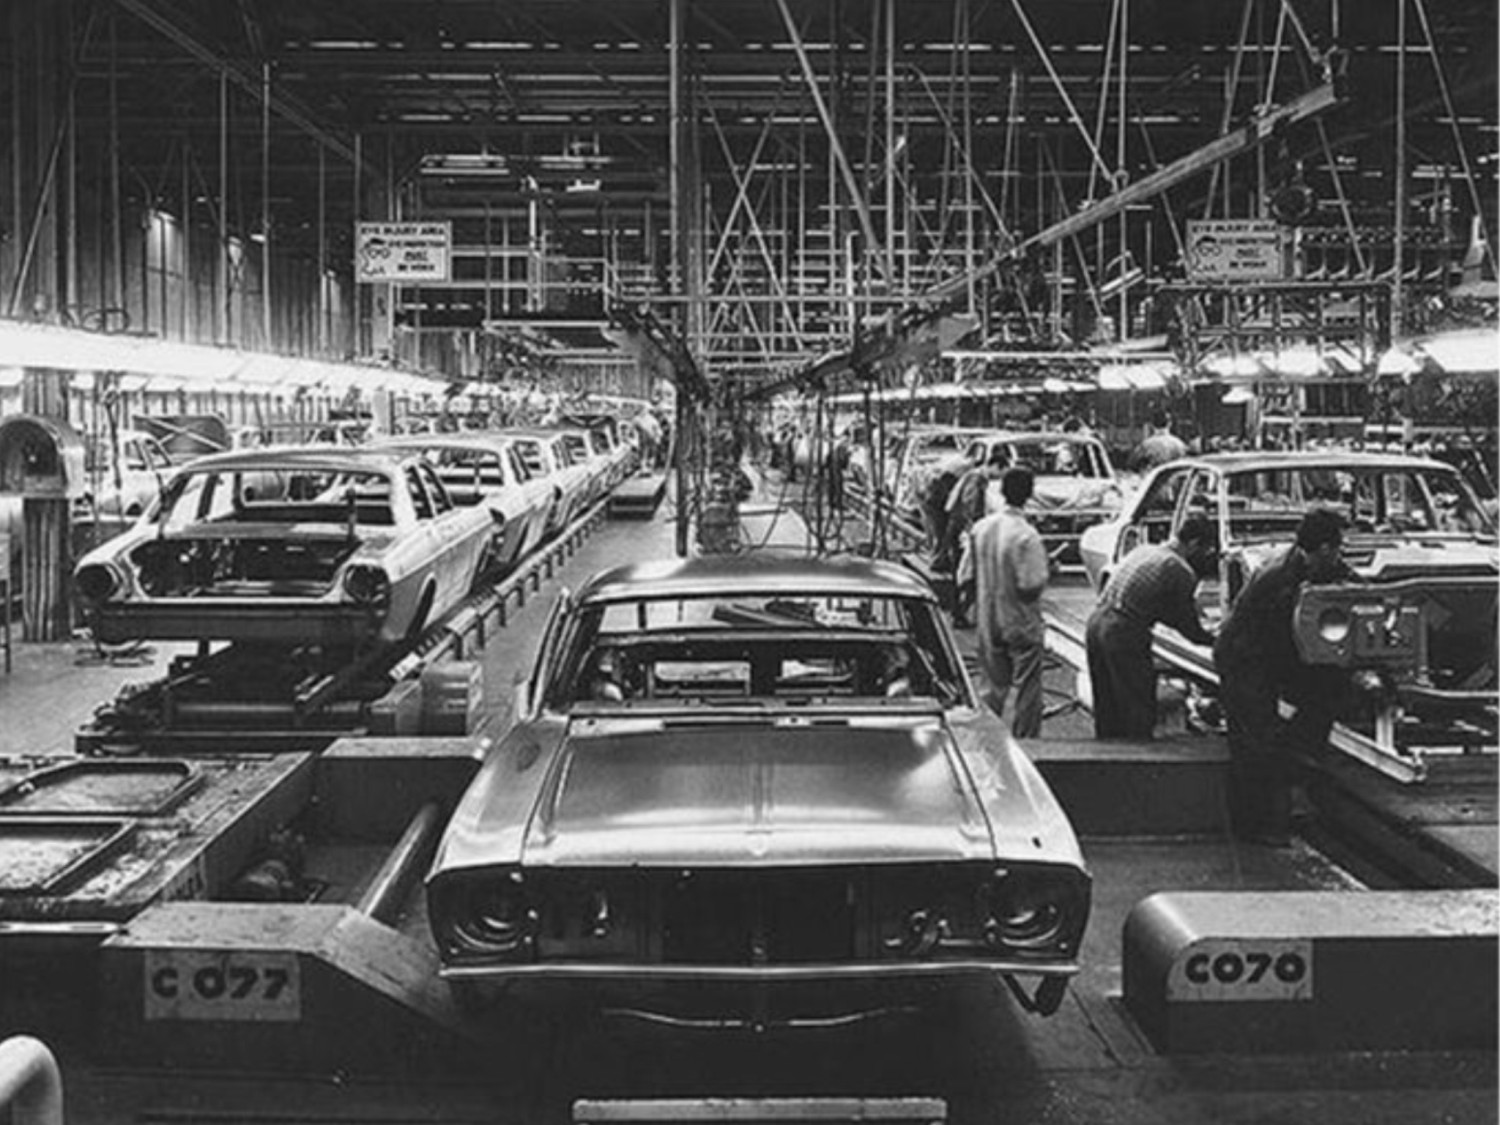 ,1969,xwgt,Ford,351 windsor,xwgt phase 1,manual,1,Sedan,1969 Ford xwgt phase 1,Fastford,Ford xwgt phase 1,phase